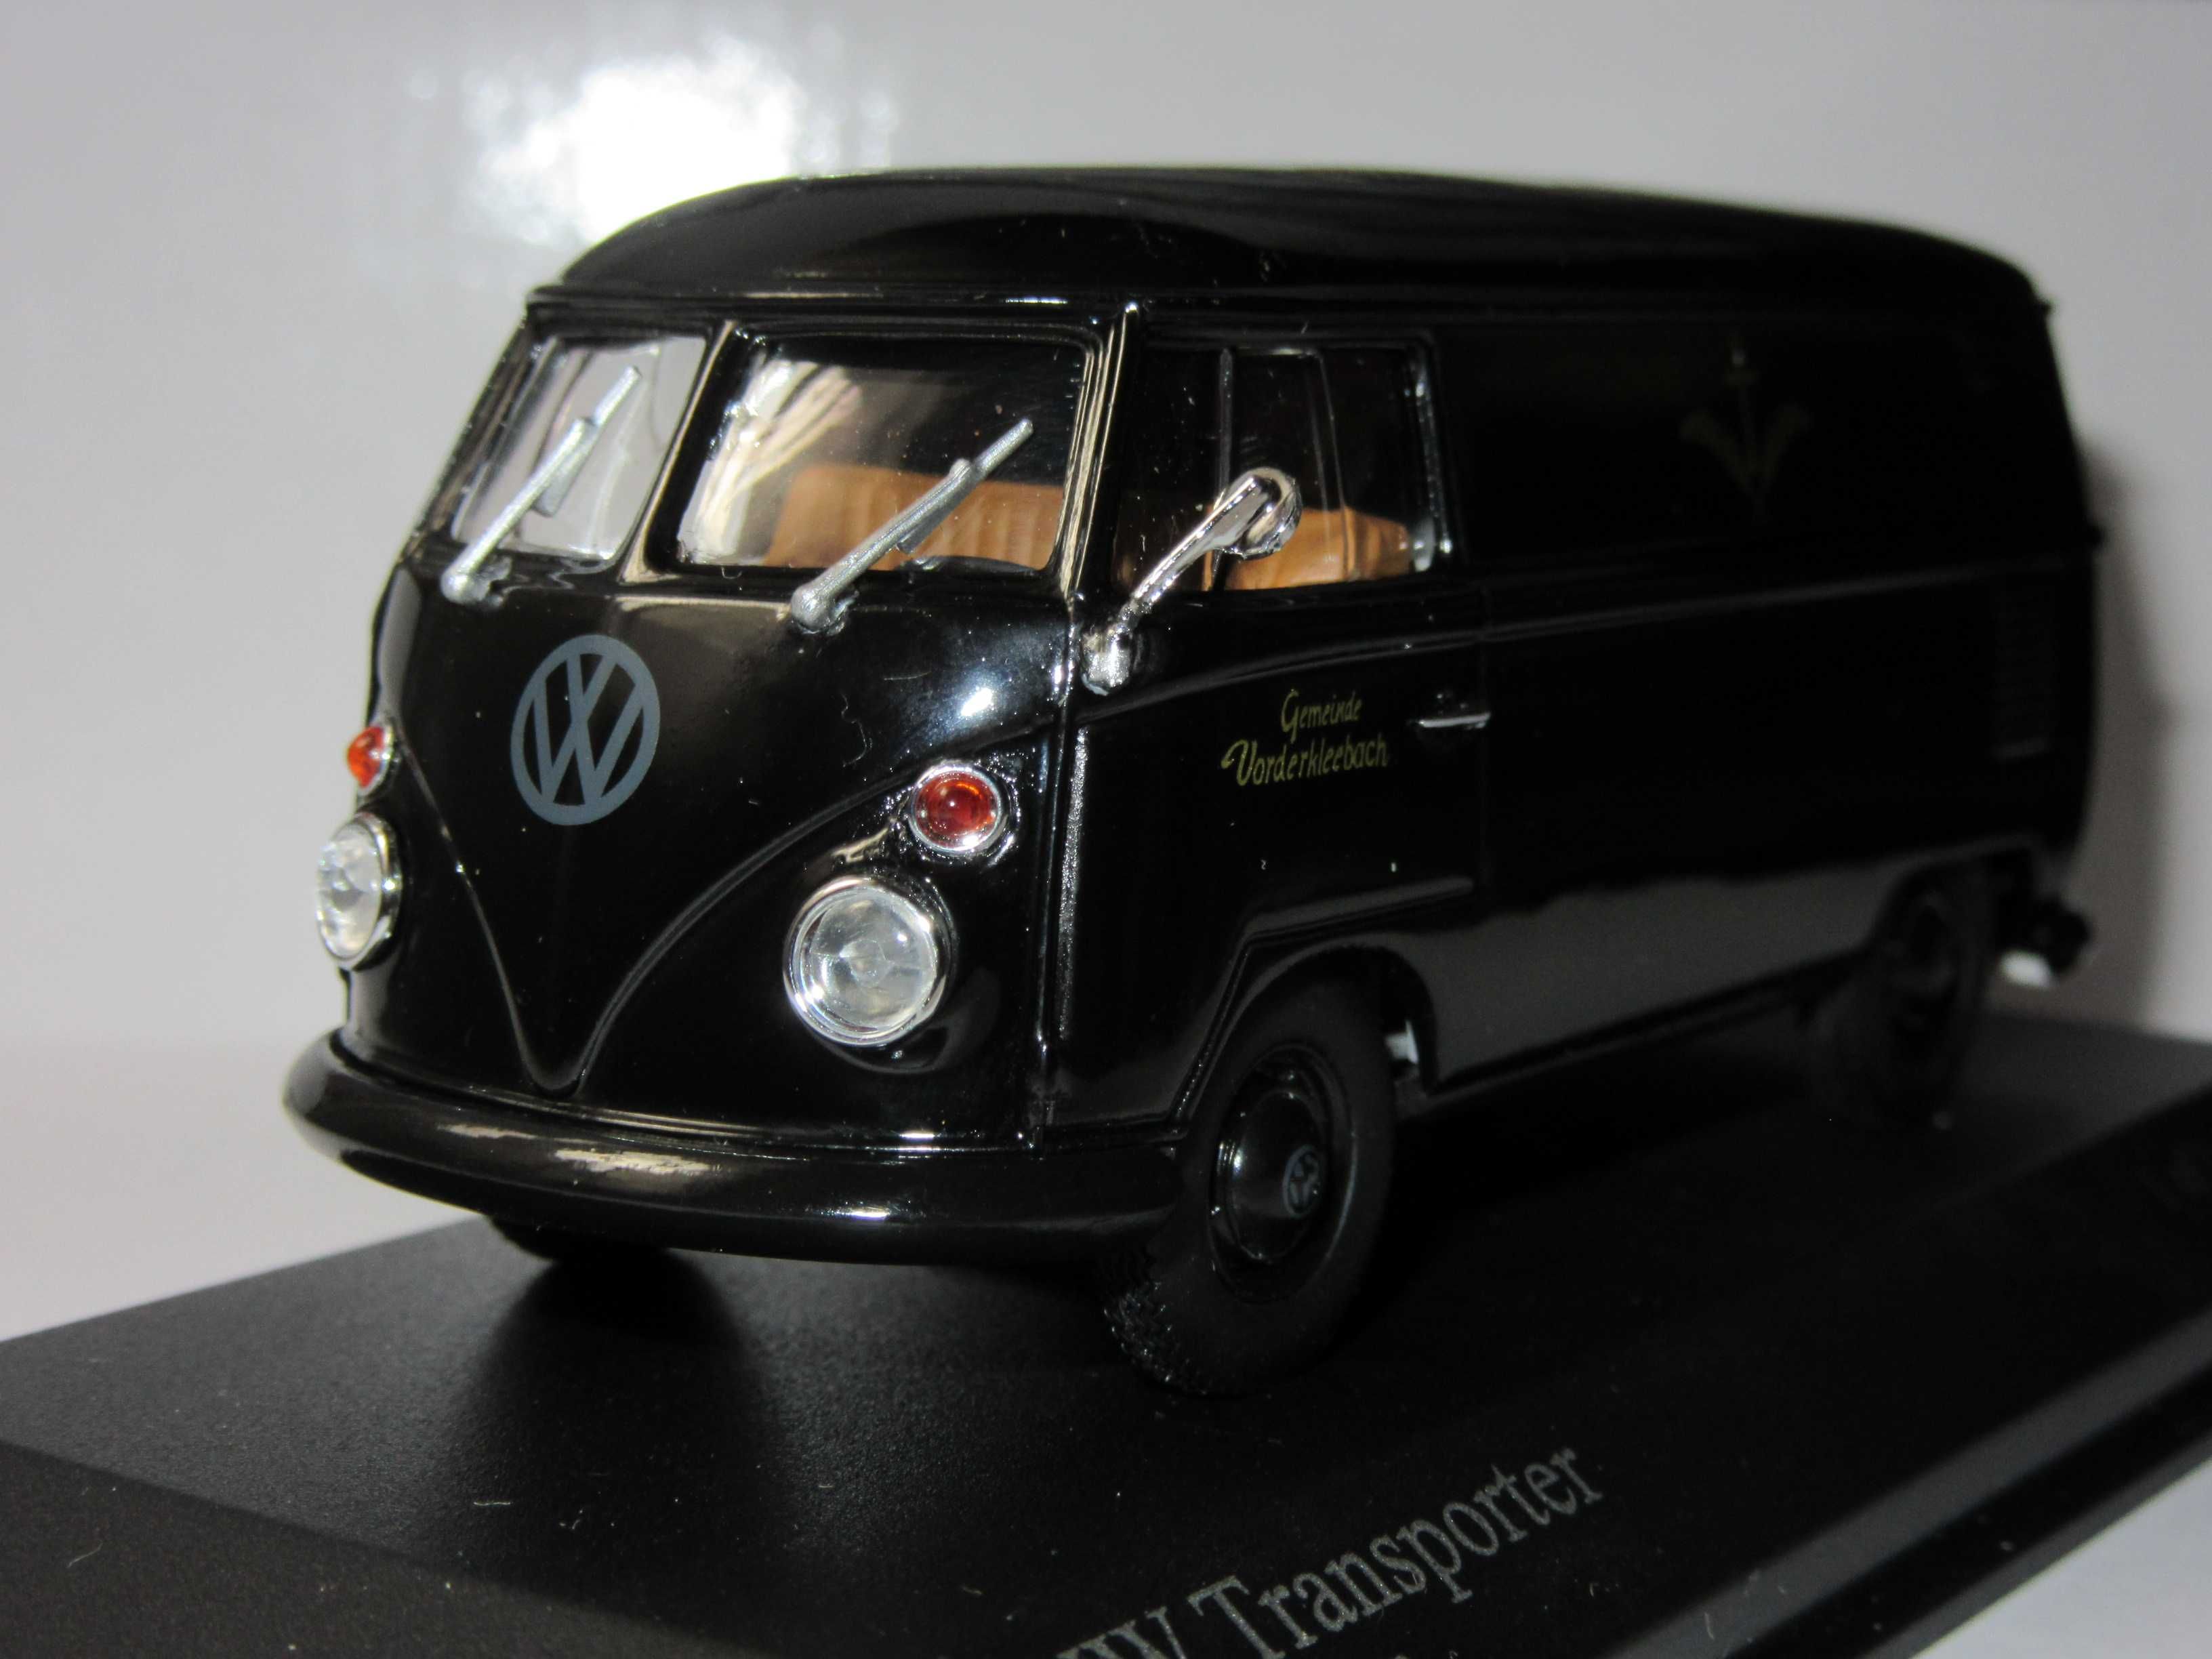 Macheta VW Transporter Minichamps 1:43